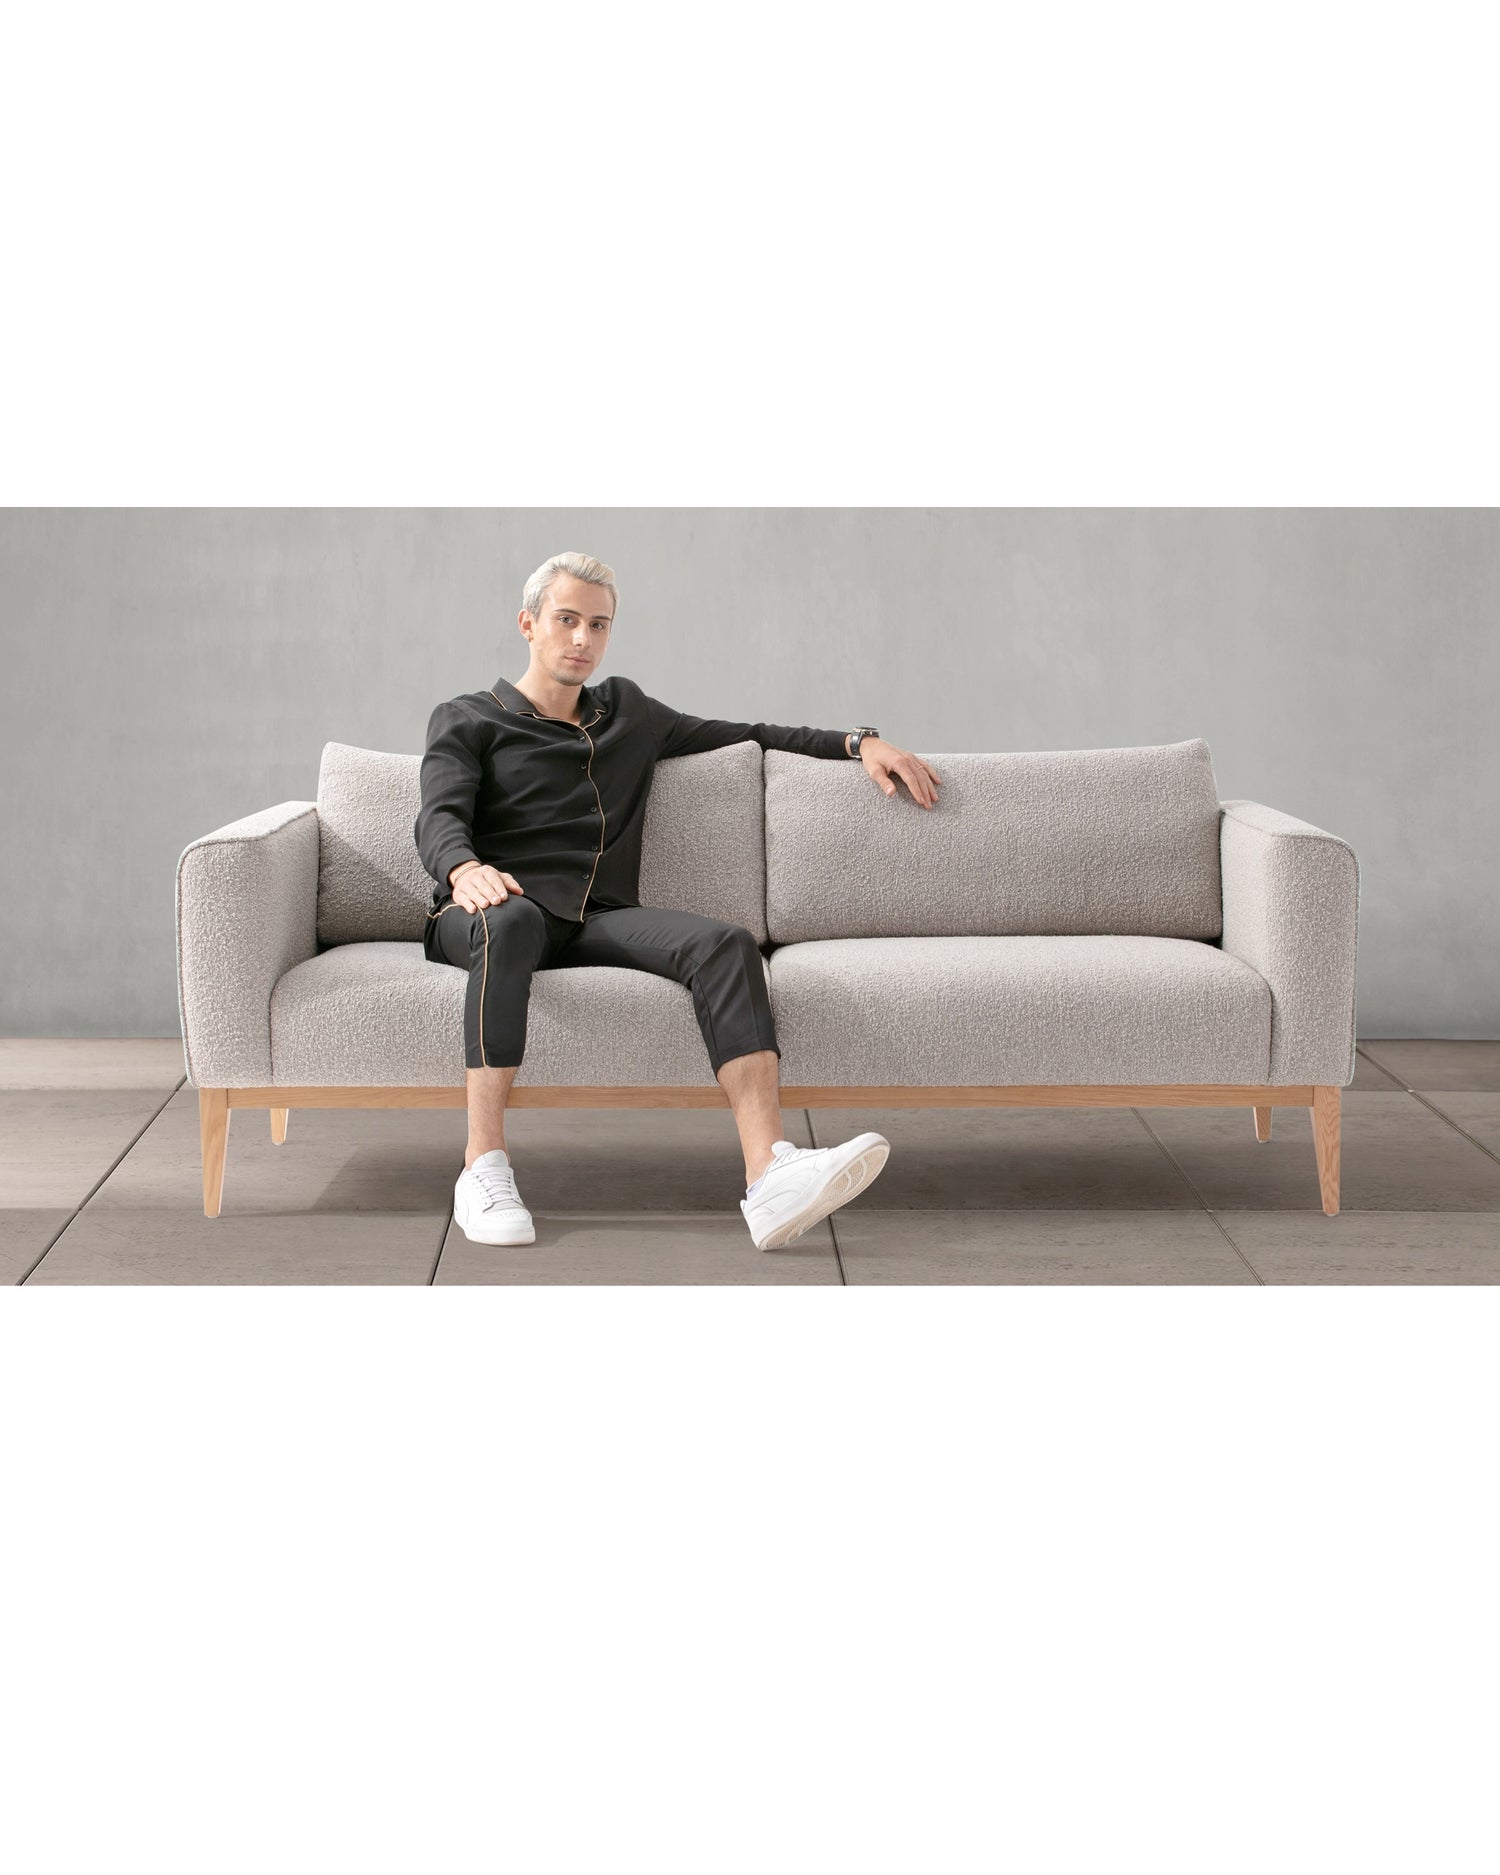 Colin 84" Fabric Sofa with person